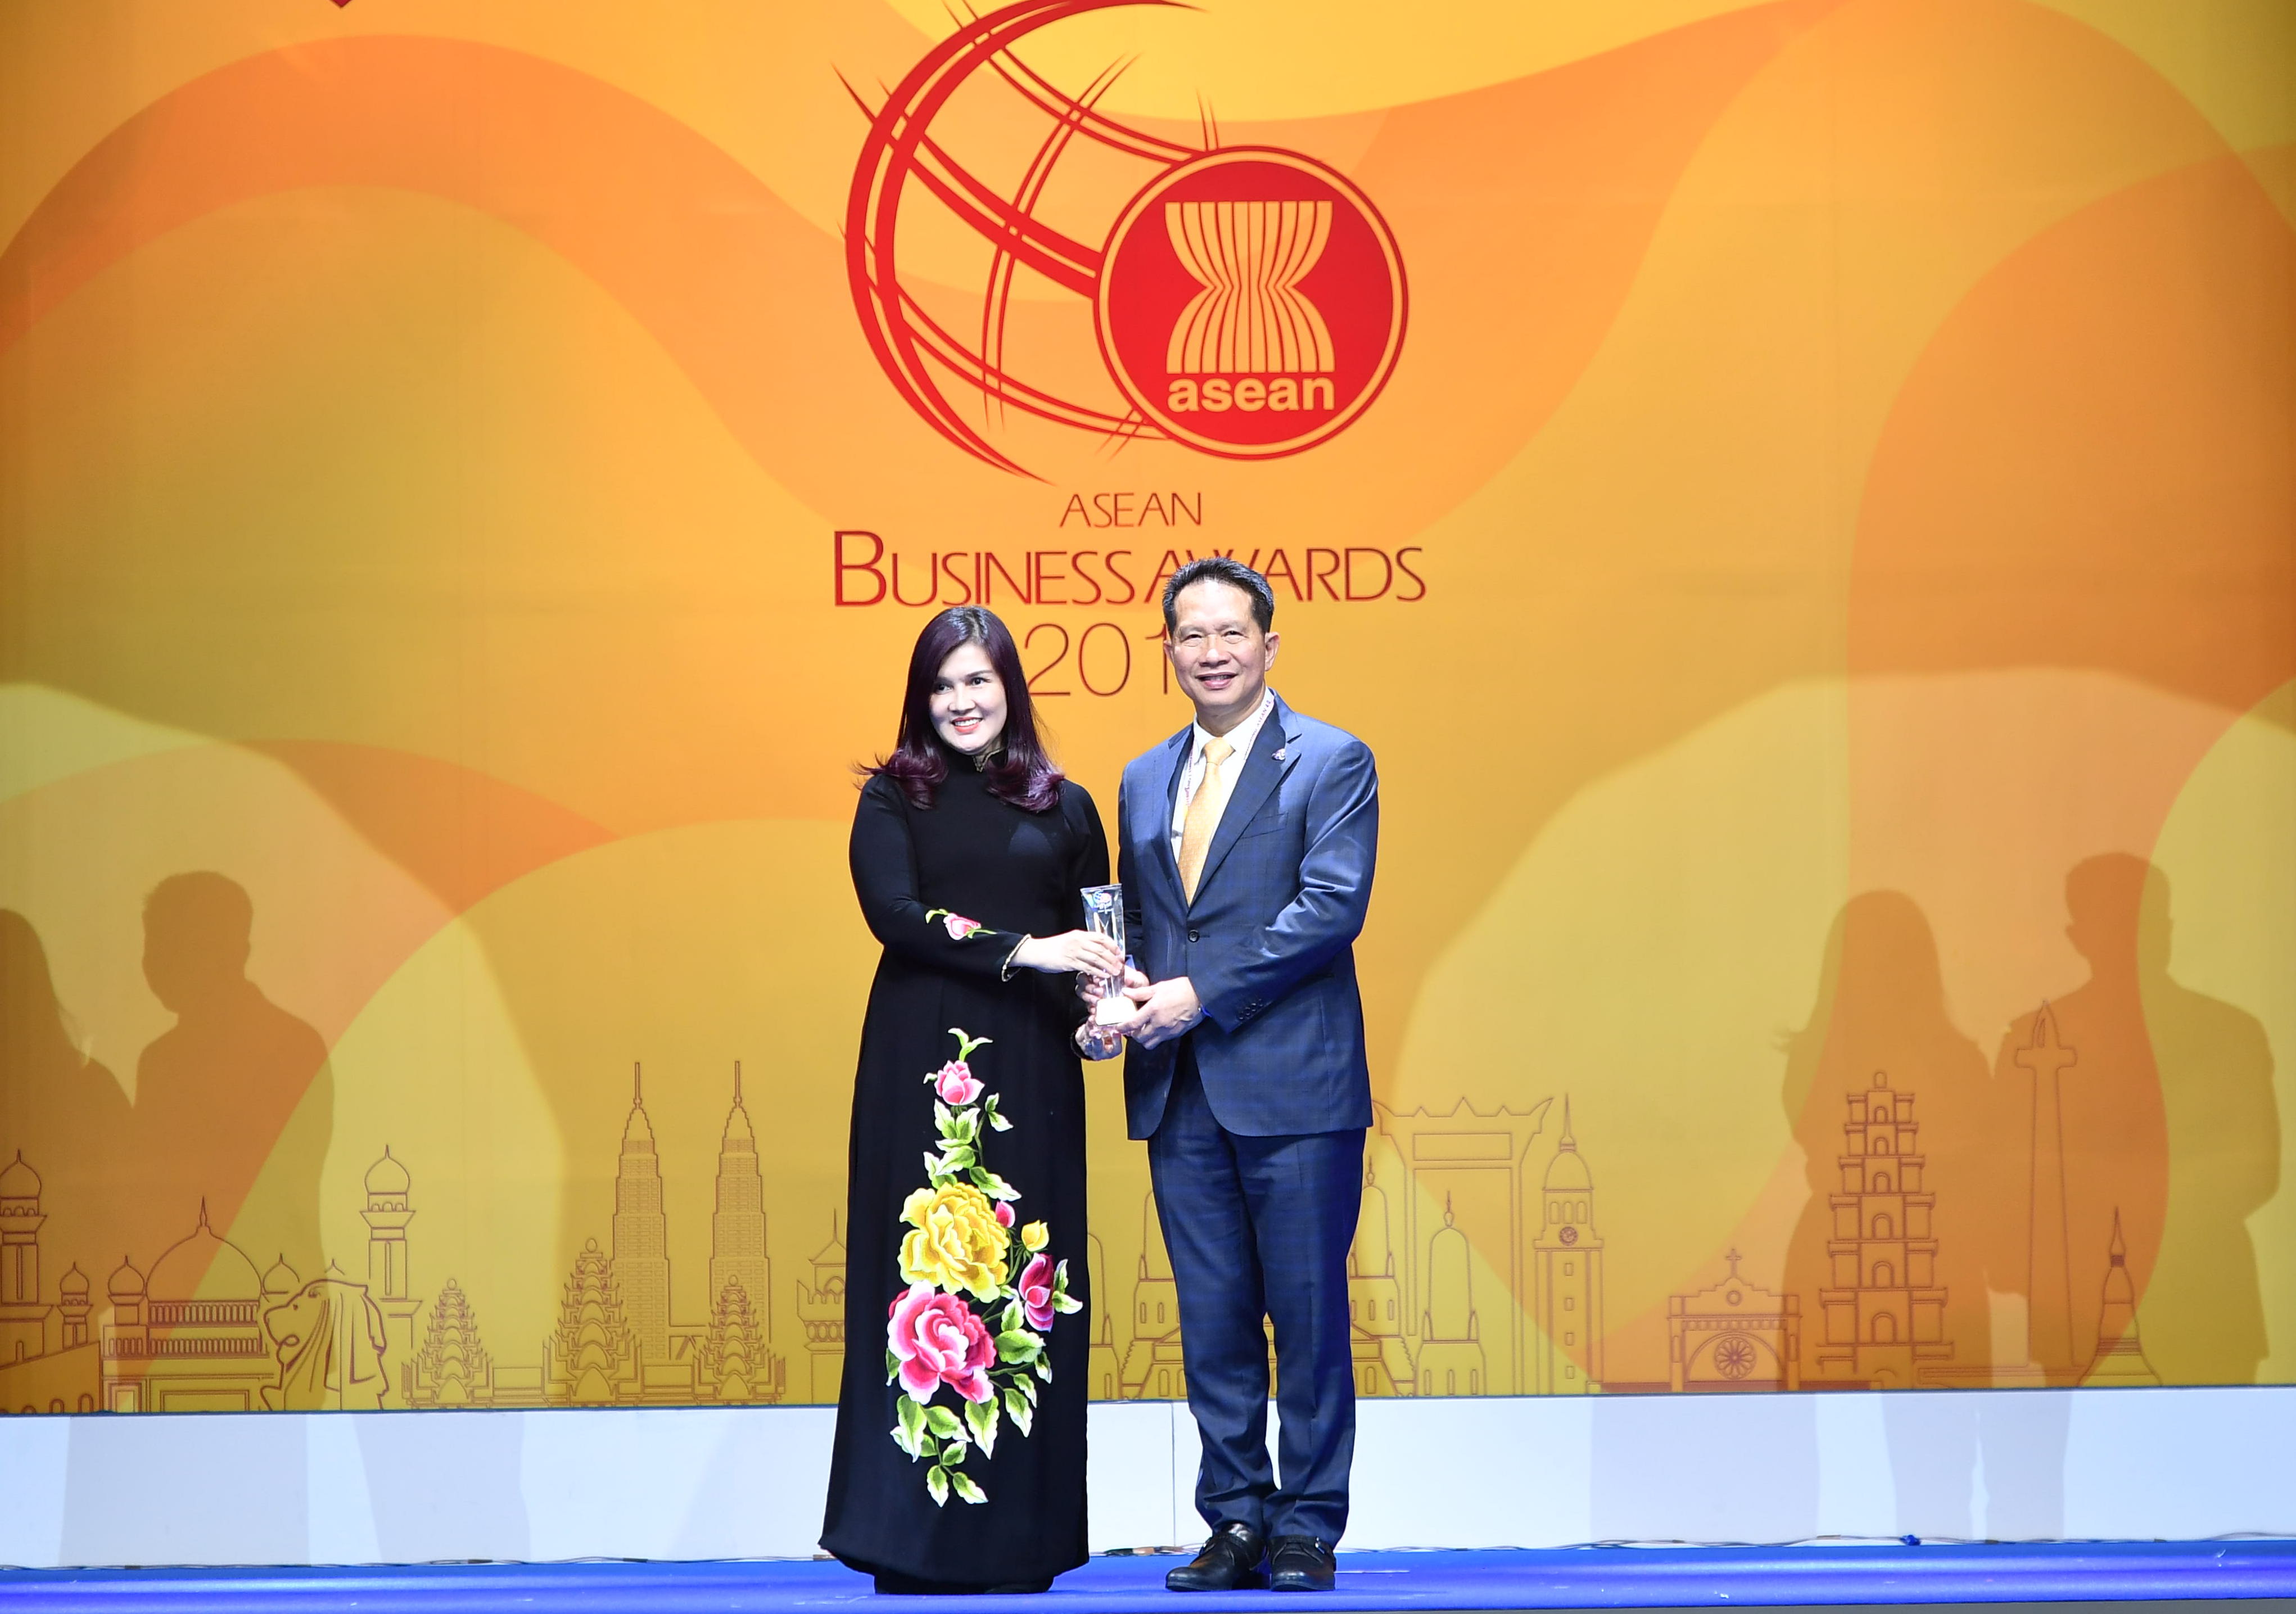 Vietjet named ASEAN’s best aviation enterprise at 2019 ASEAN Business Awards